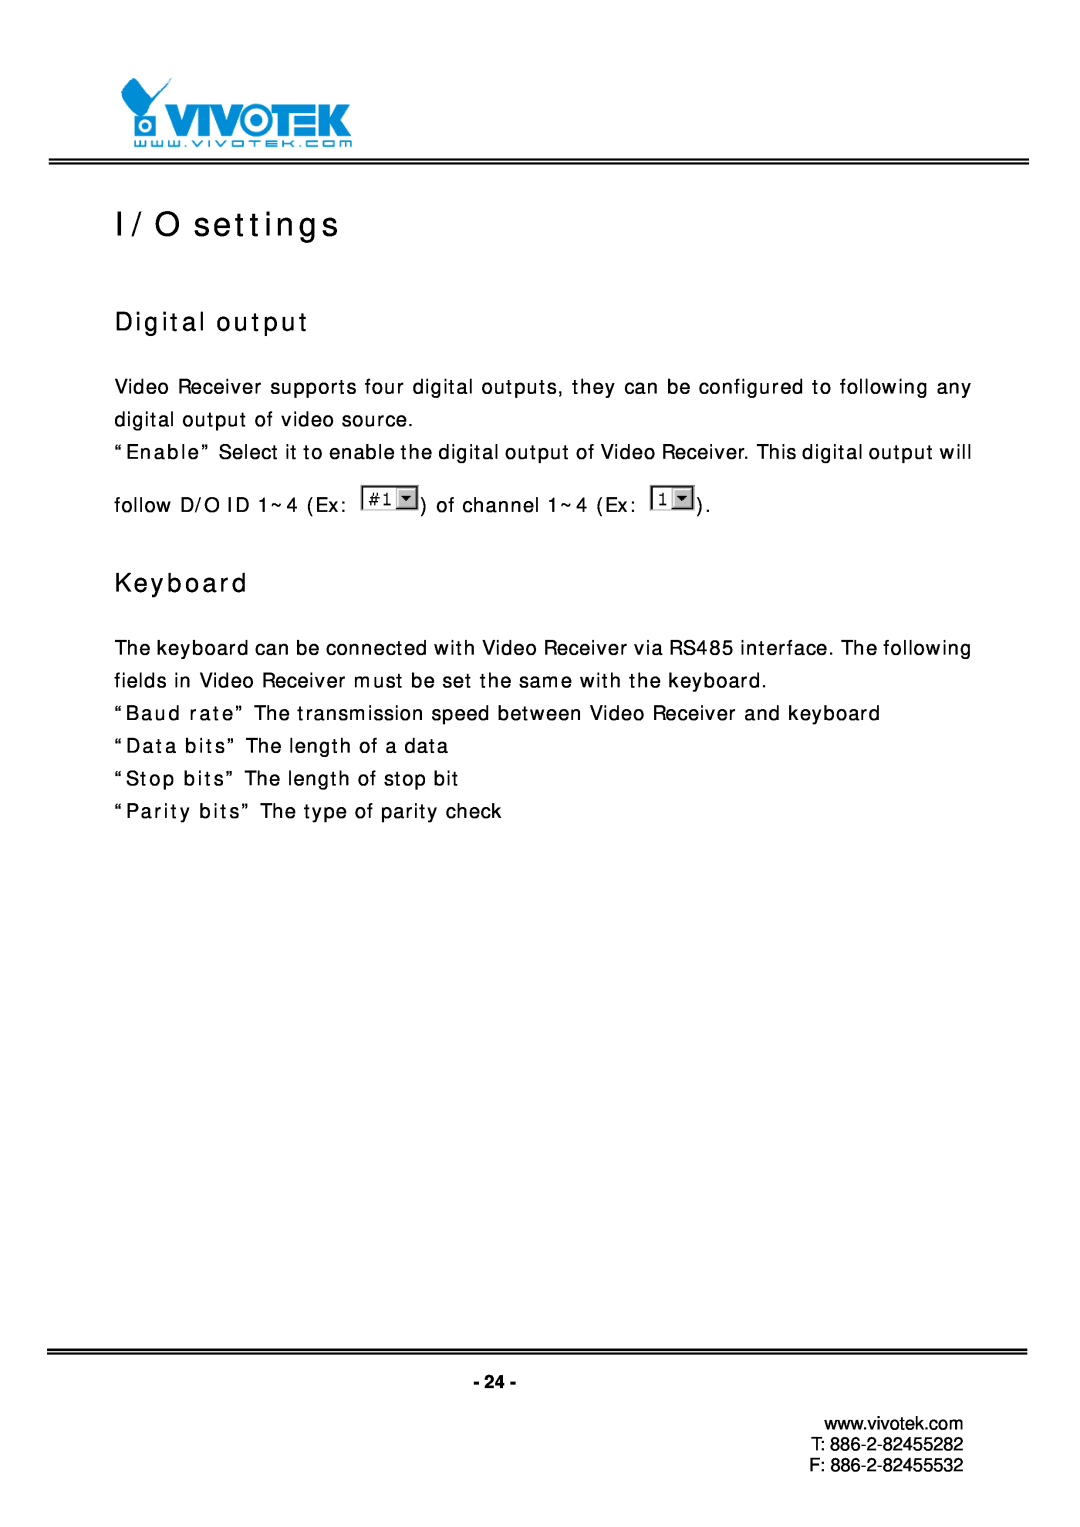 Vivotek RX7101 manual I/O settings, Digital output, Keyboard 